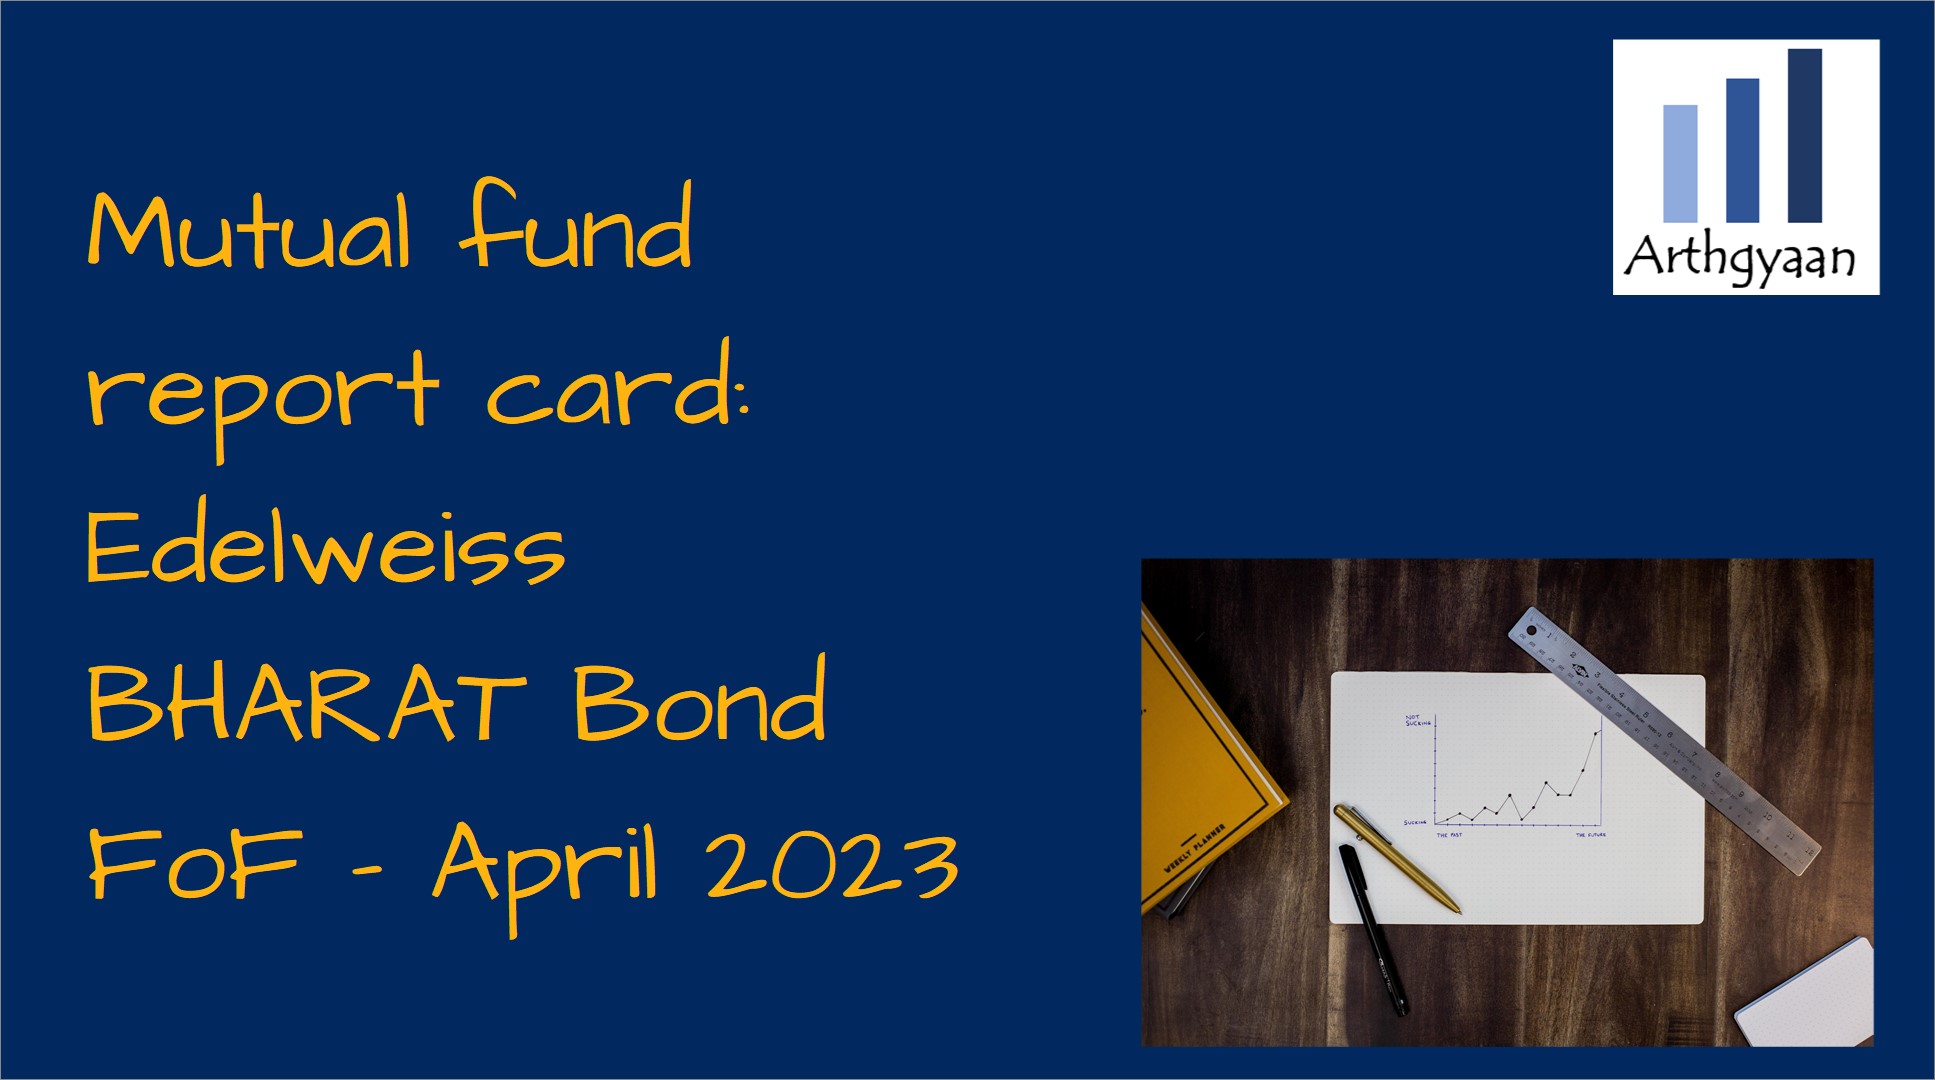 Mutual fund report card: Edelweiss BHARAT Bond FoF - April 2023